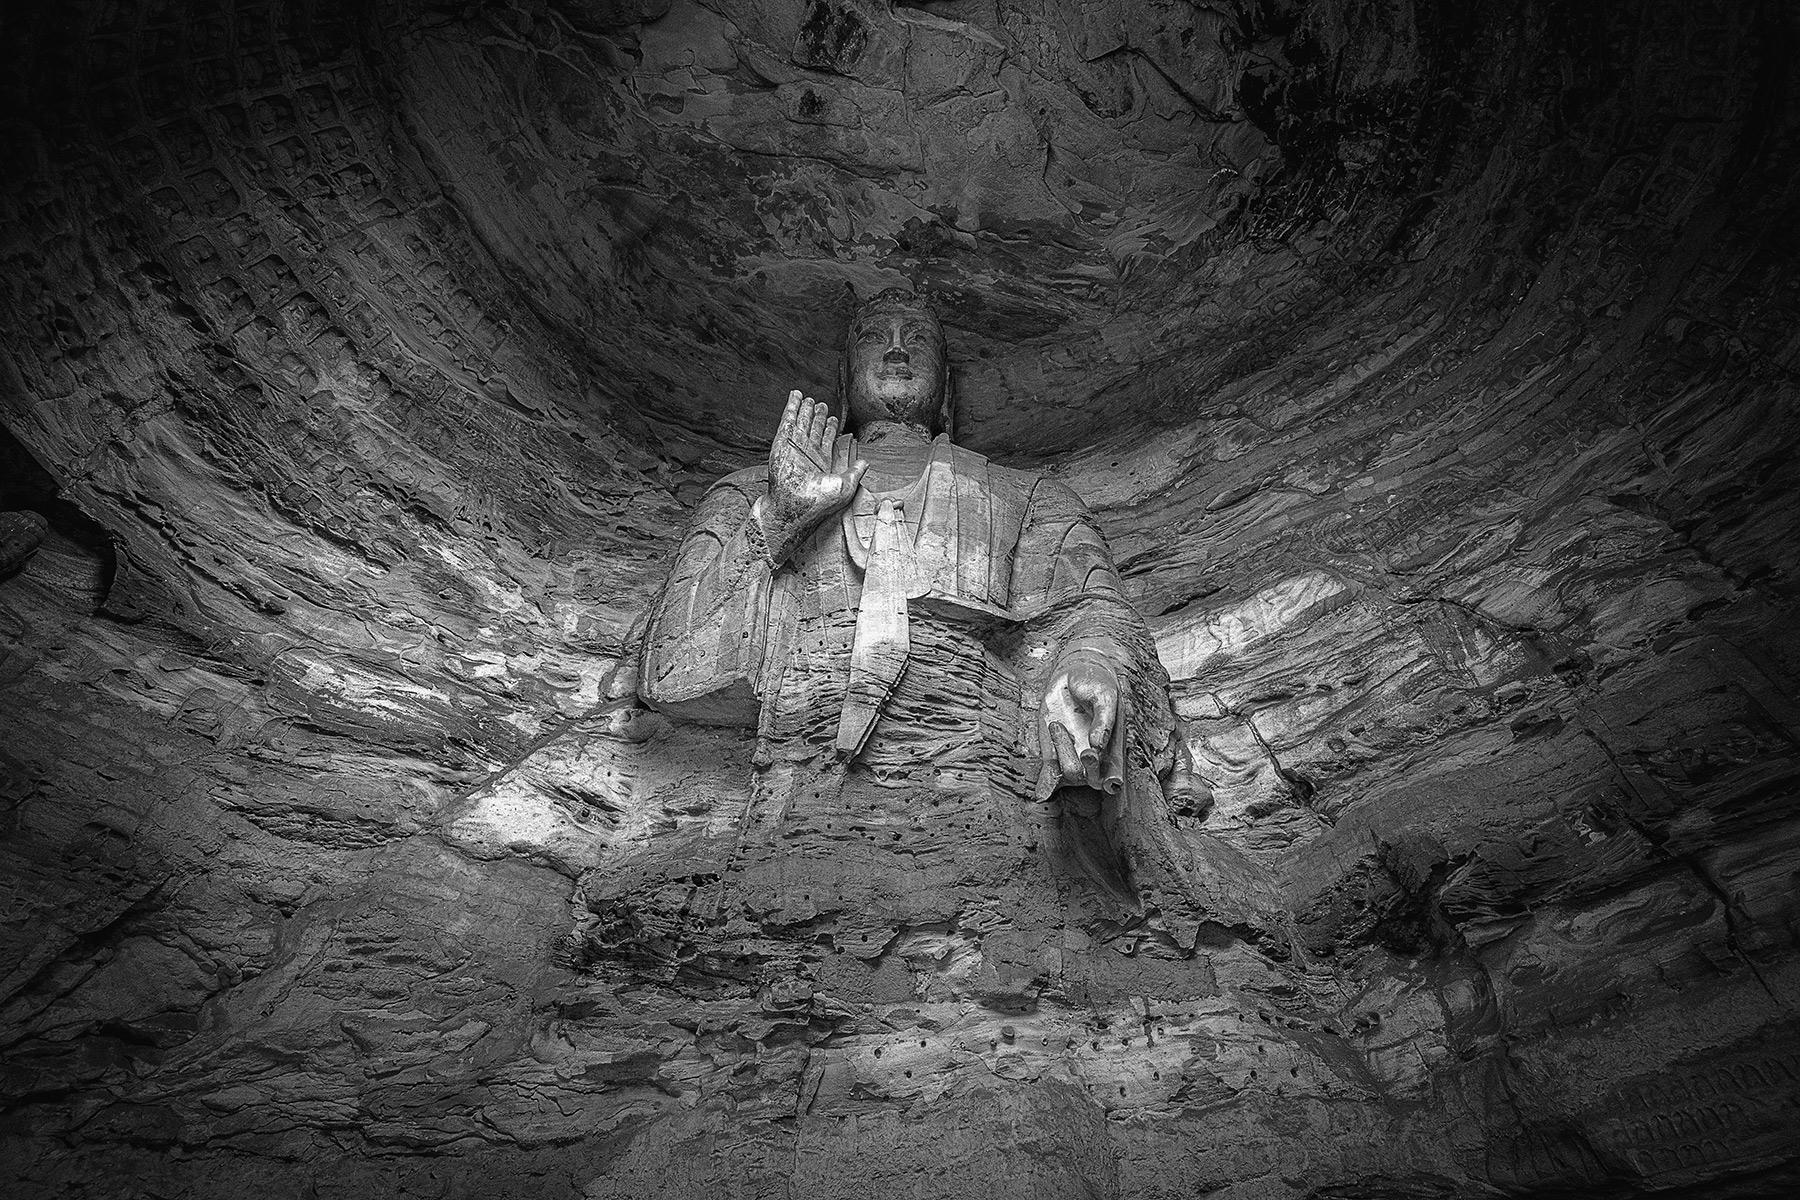 Budda in Grotto